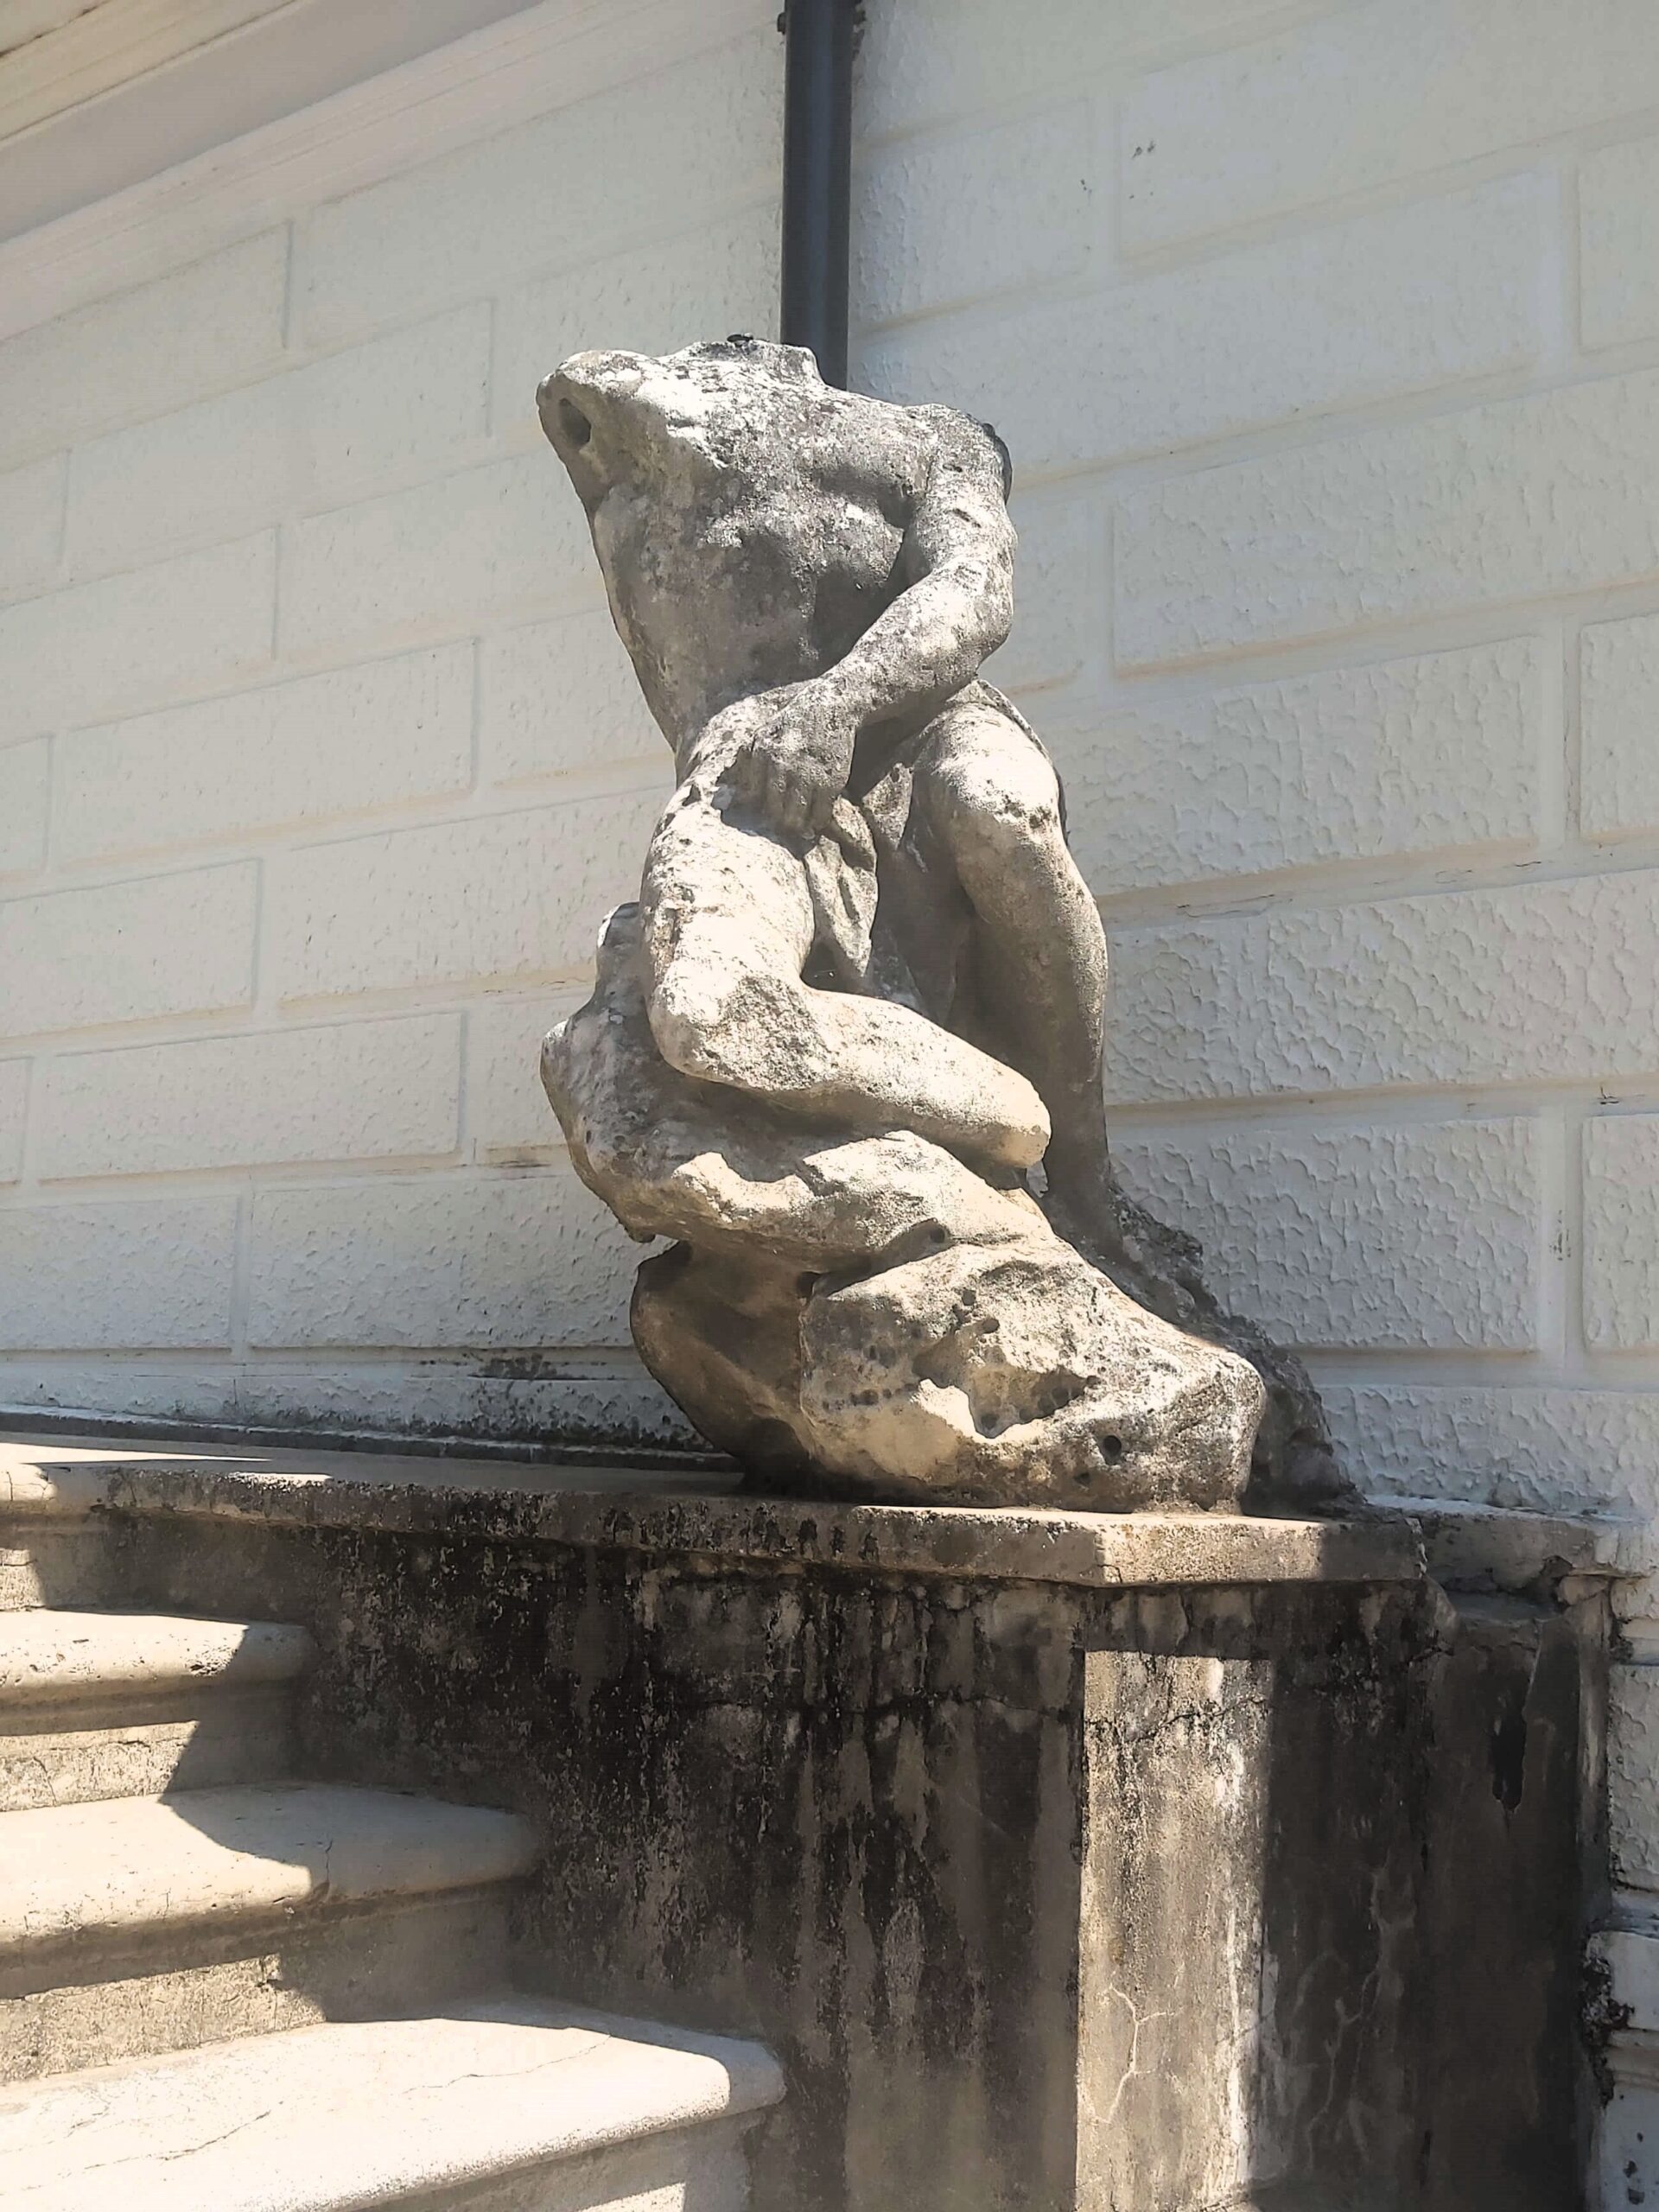 A headless man statue, Rijeka, Croatia